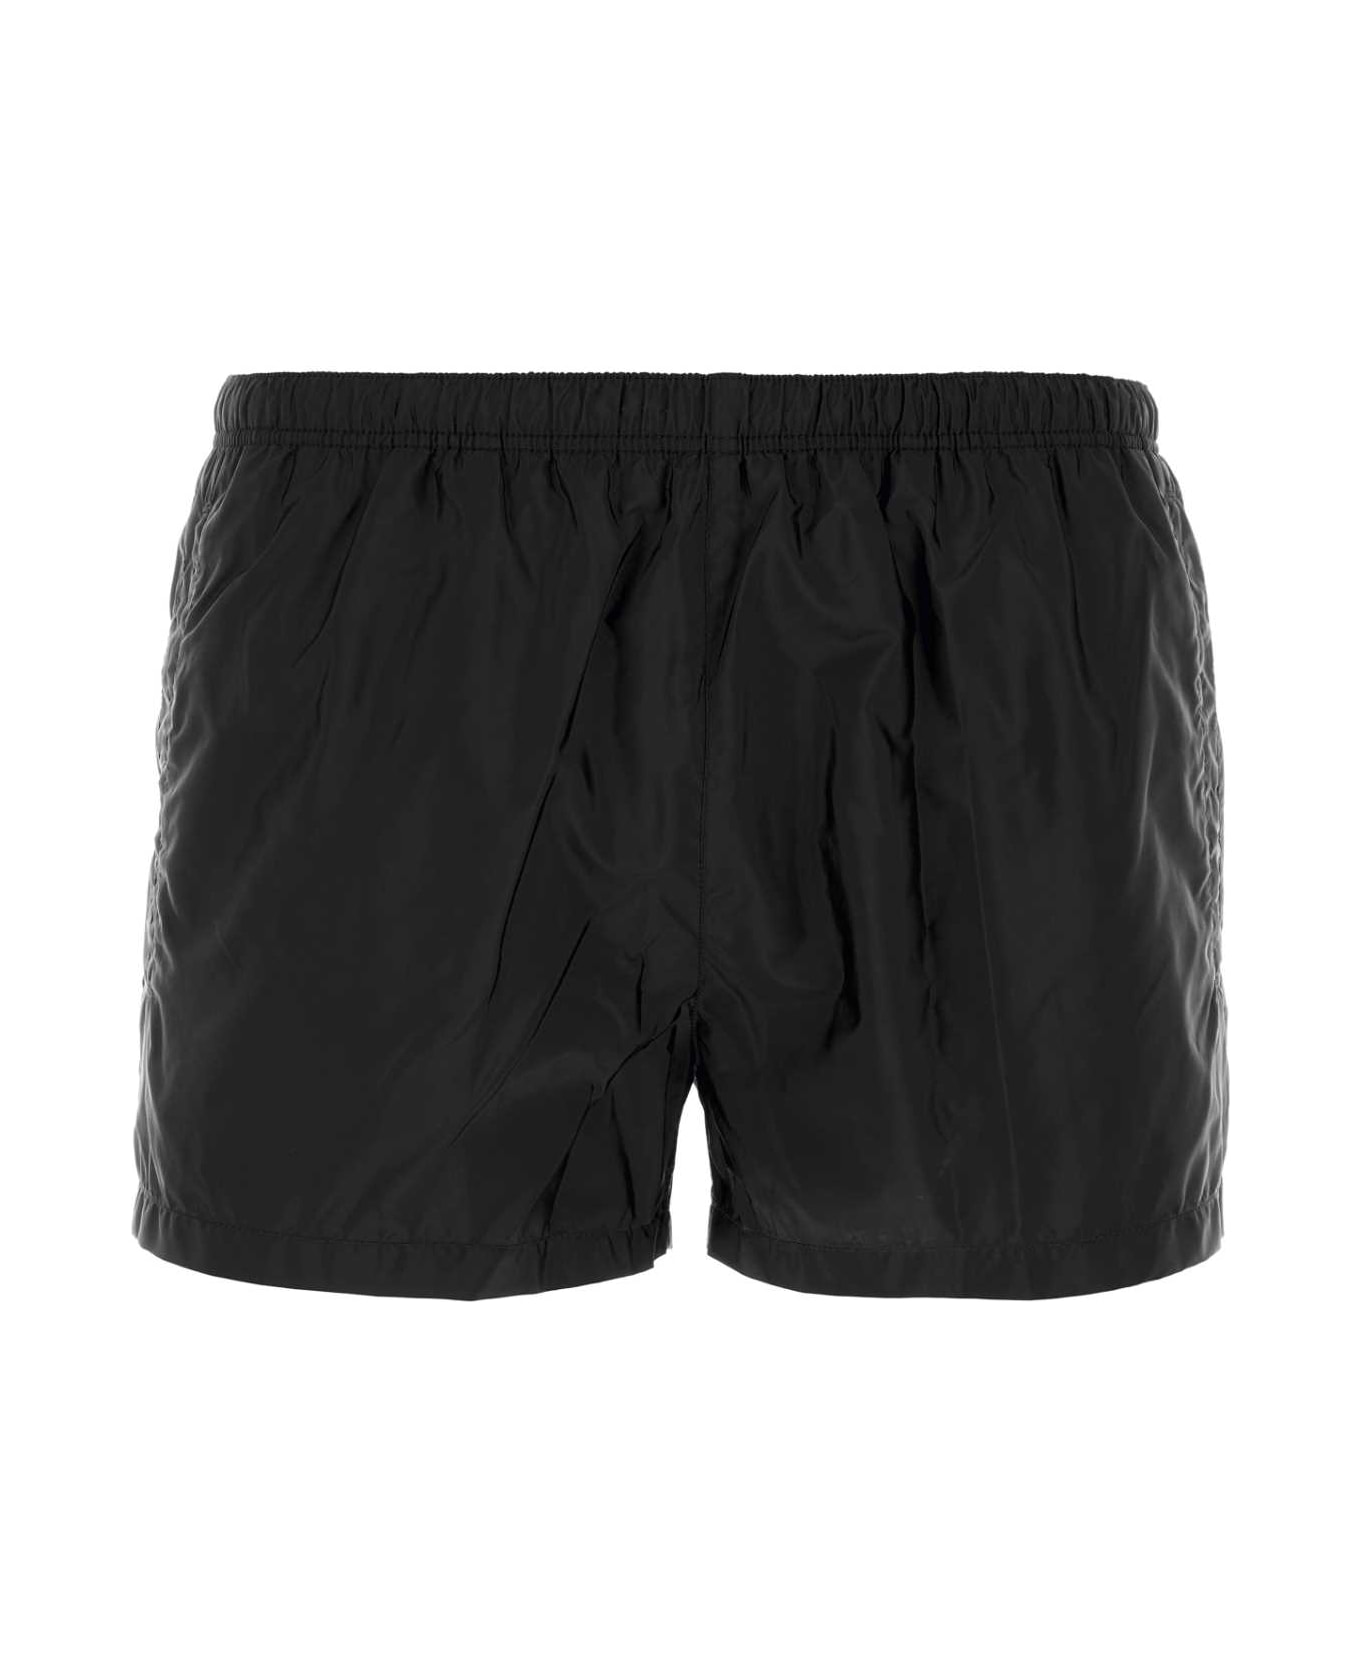 Prada Black Re-nylon Swimming Shorts - NERO